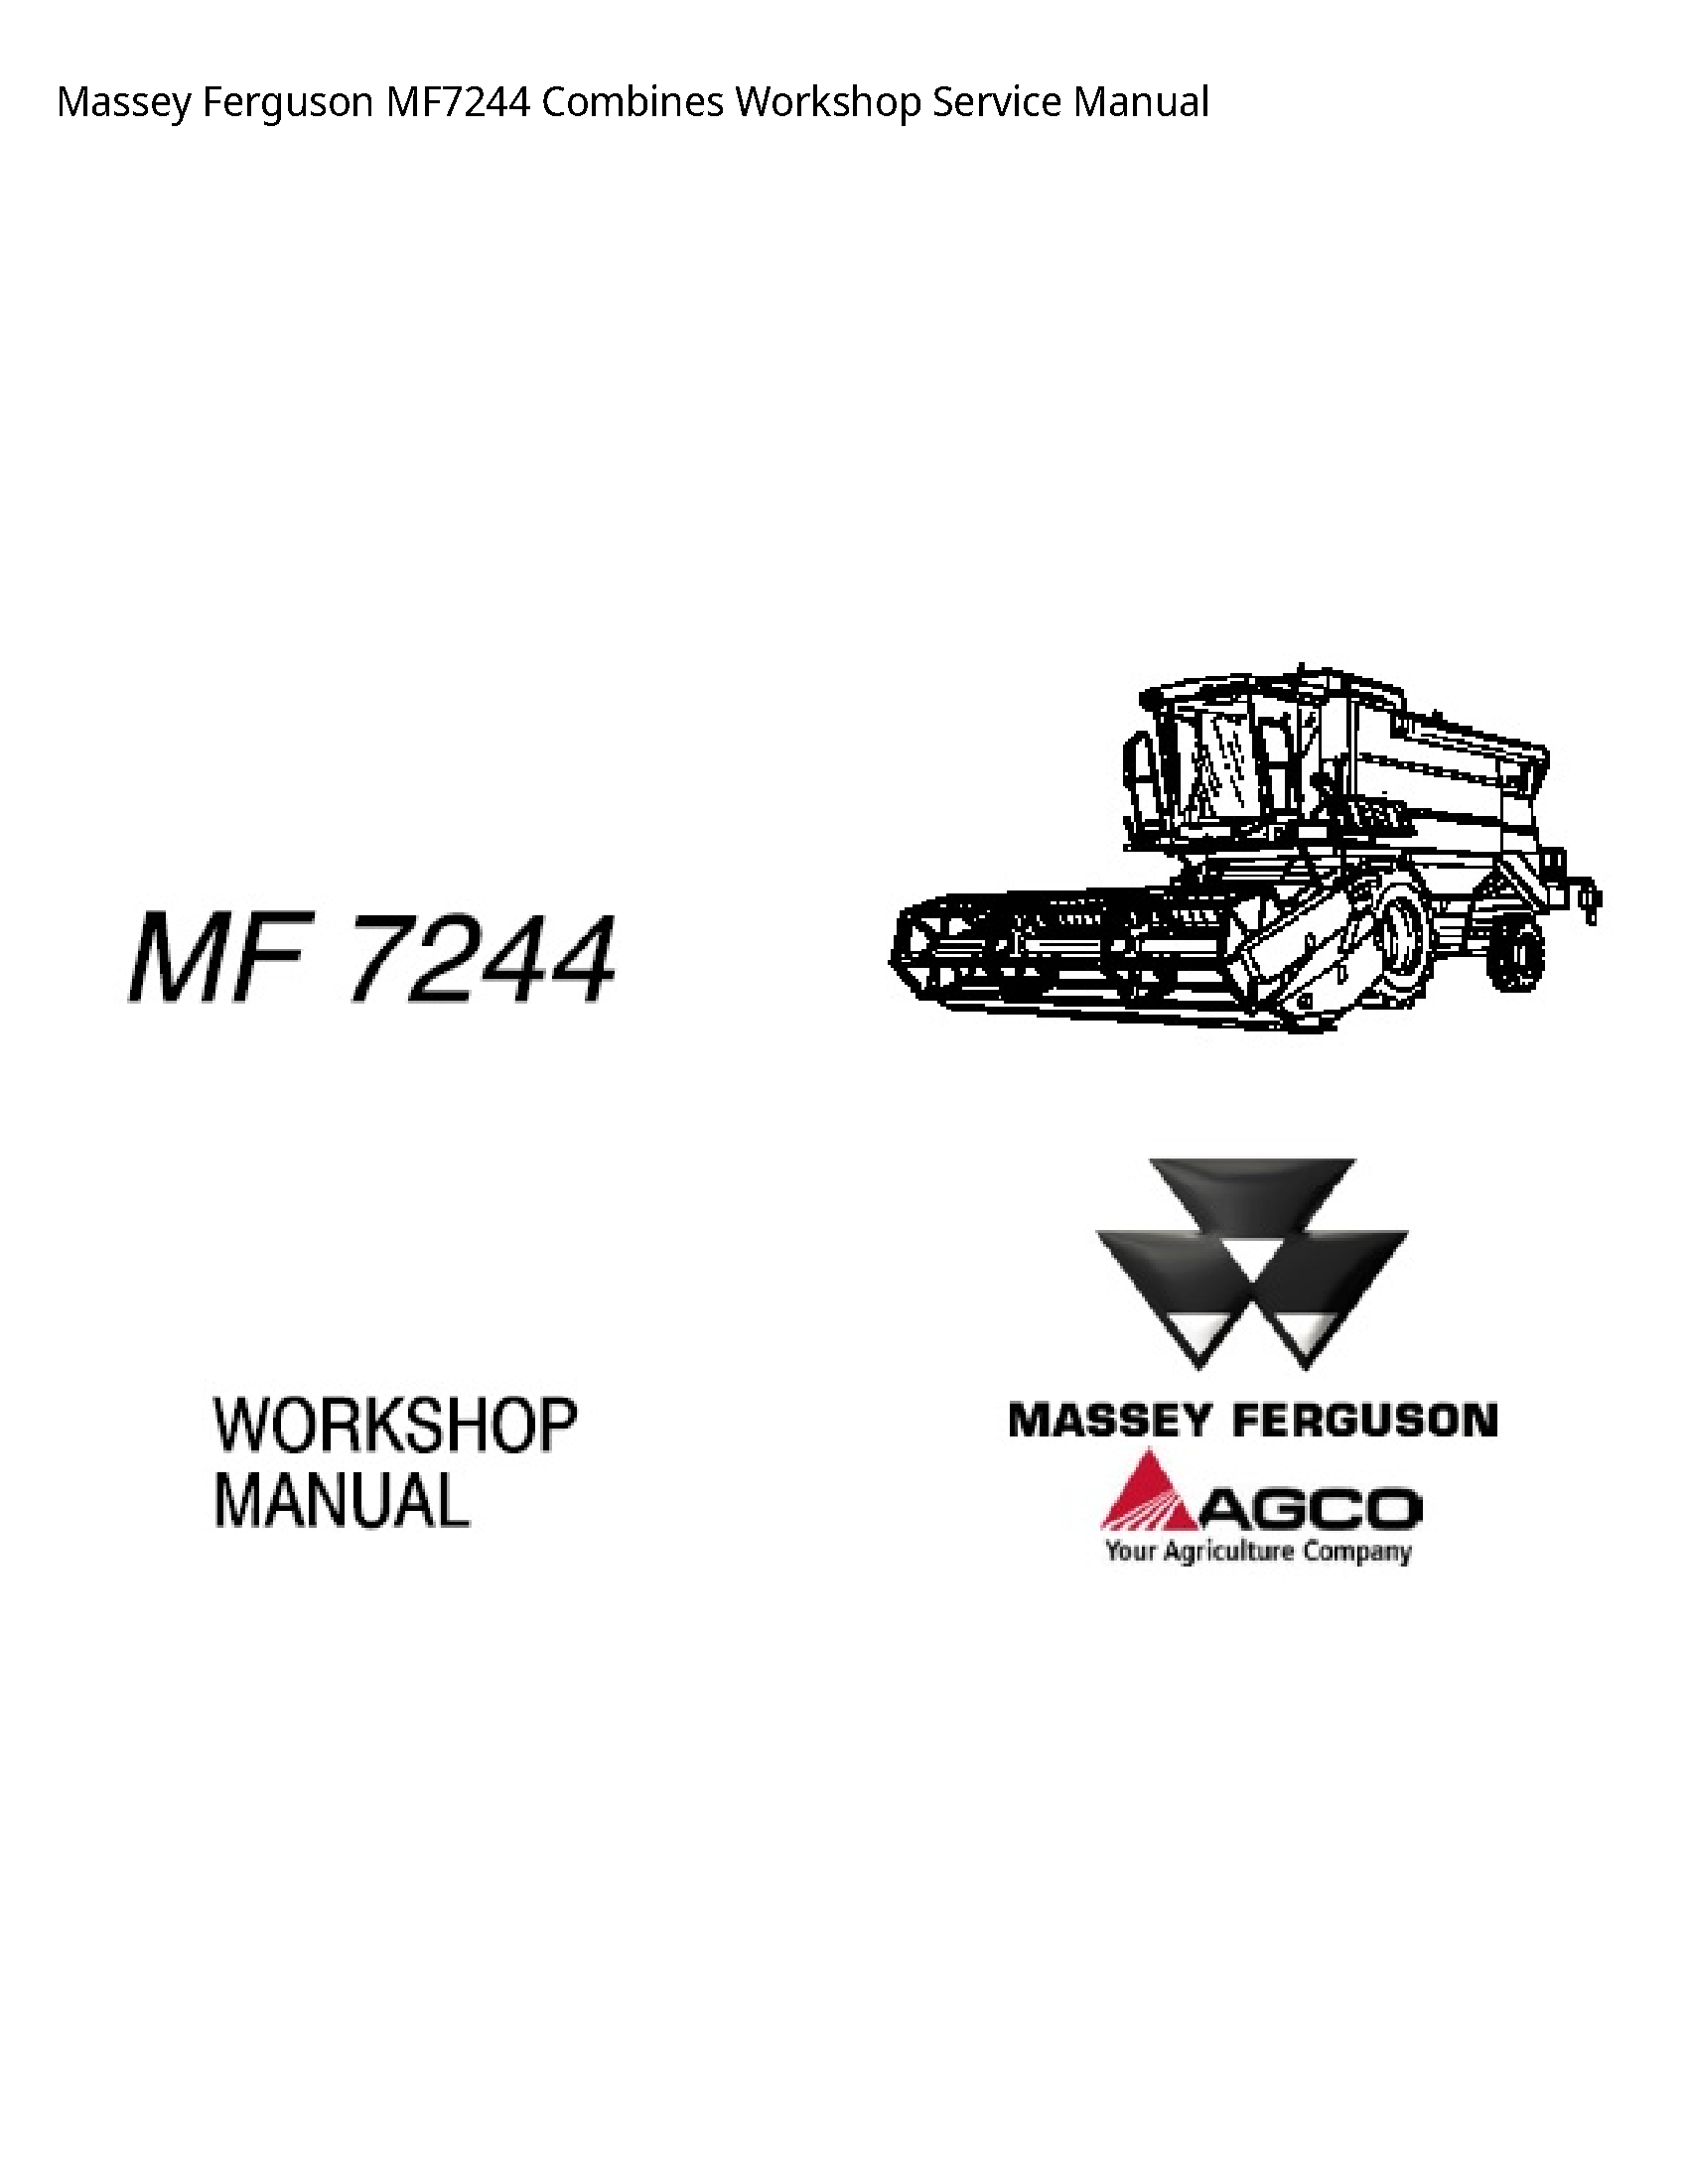 Massey Ferguson MF7244 Combines Service manual